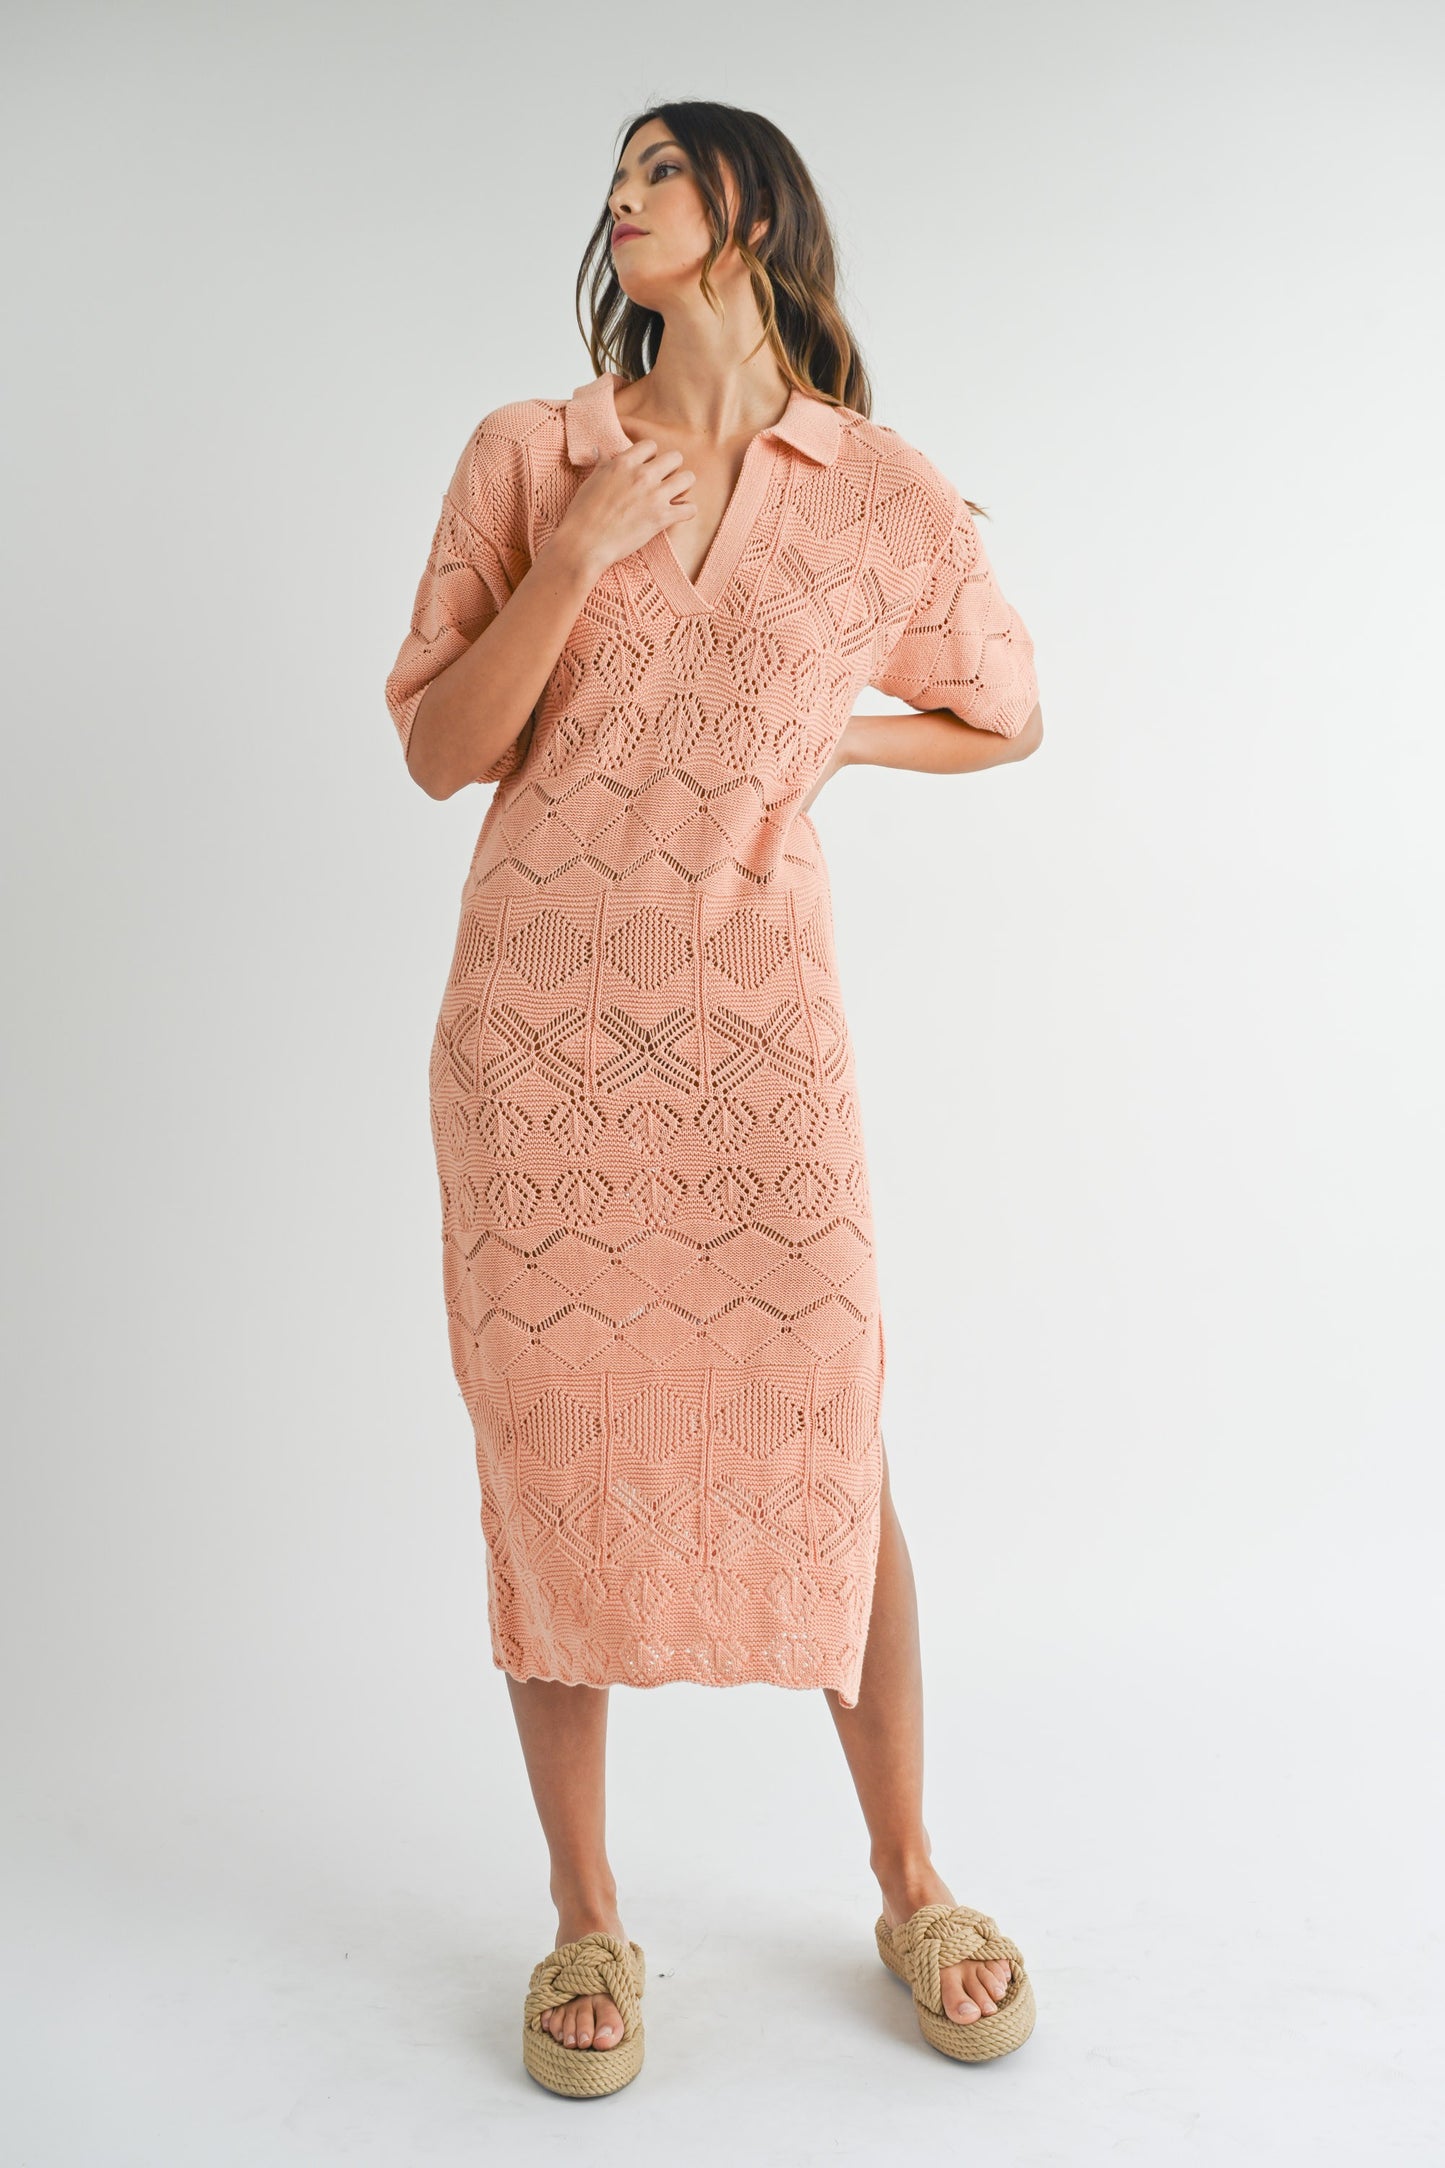 Palma Crochet Dress